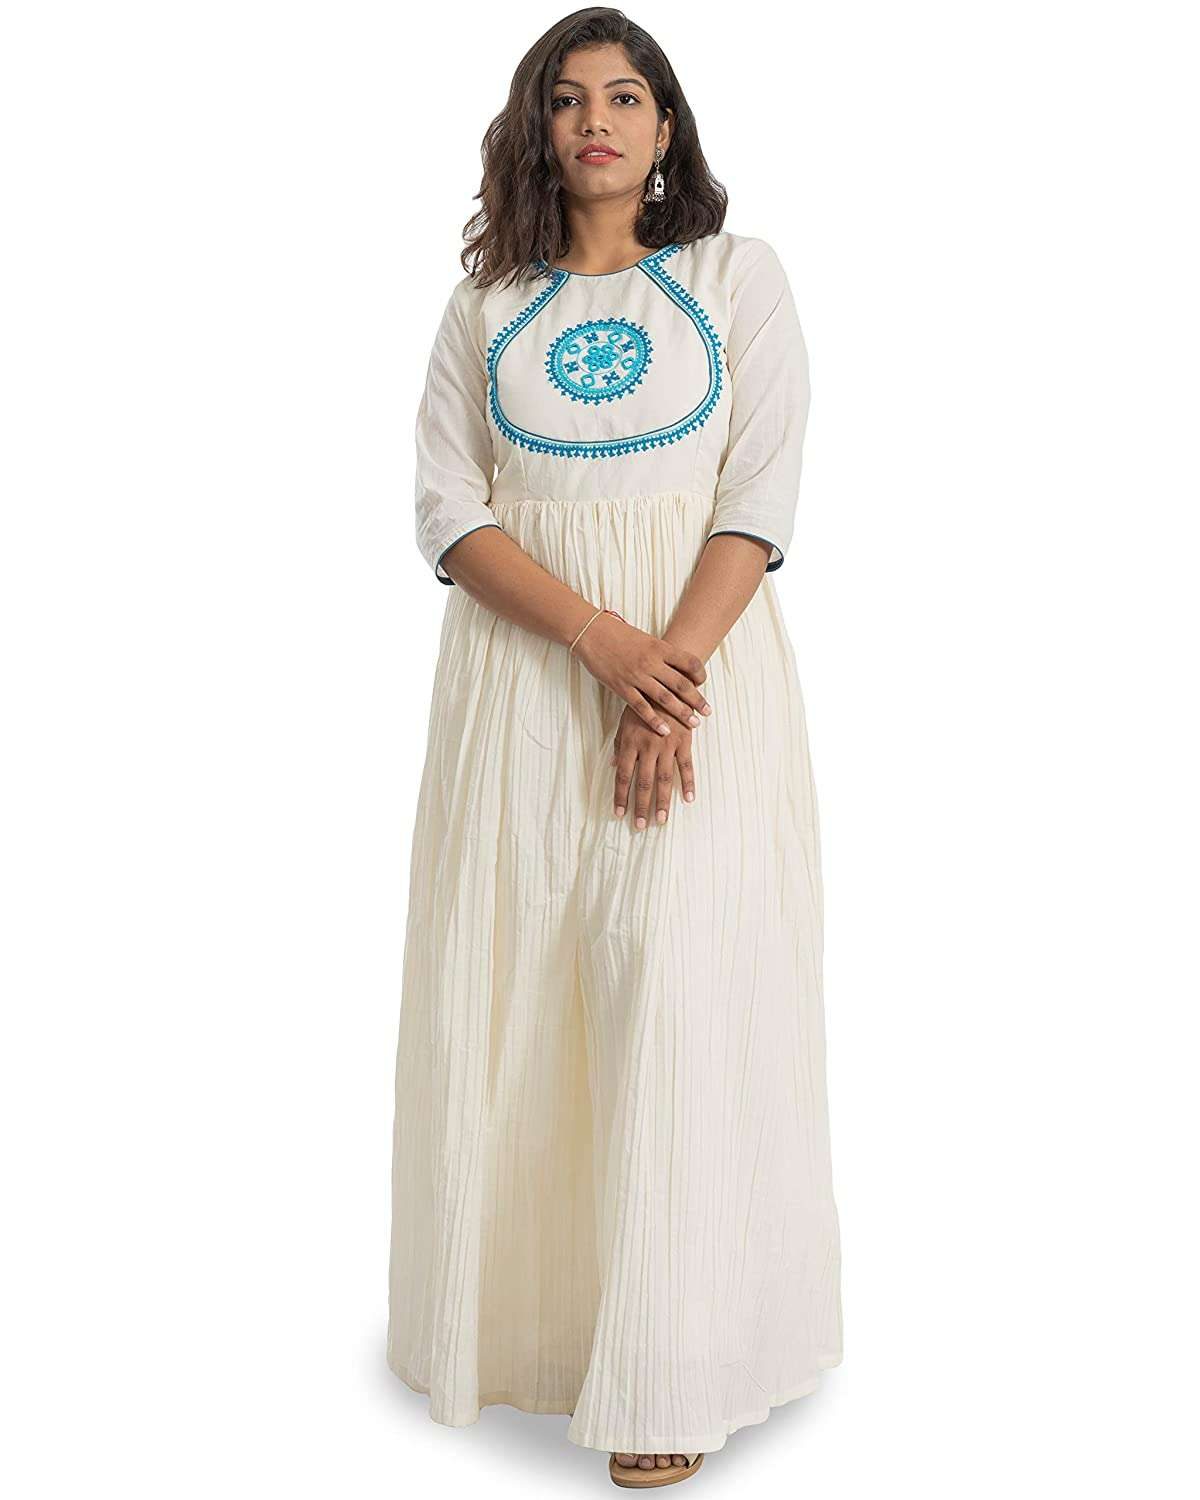 Stylish White Rayon Embroidered Long Anarkali Kurtas For Women, Gown Shape  Kurti, Flared Kurti, Tiers Kurti, अनारकली कुर्ती - SVB Ventures, Bengaluru  | ID: 2852124362133